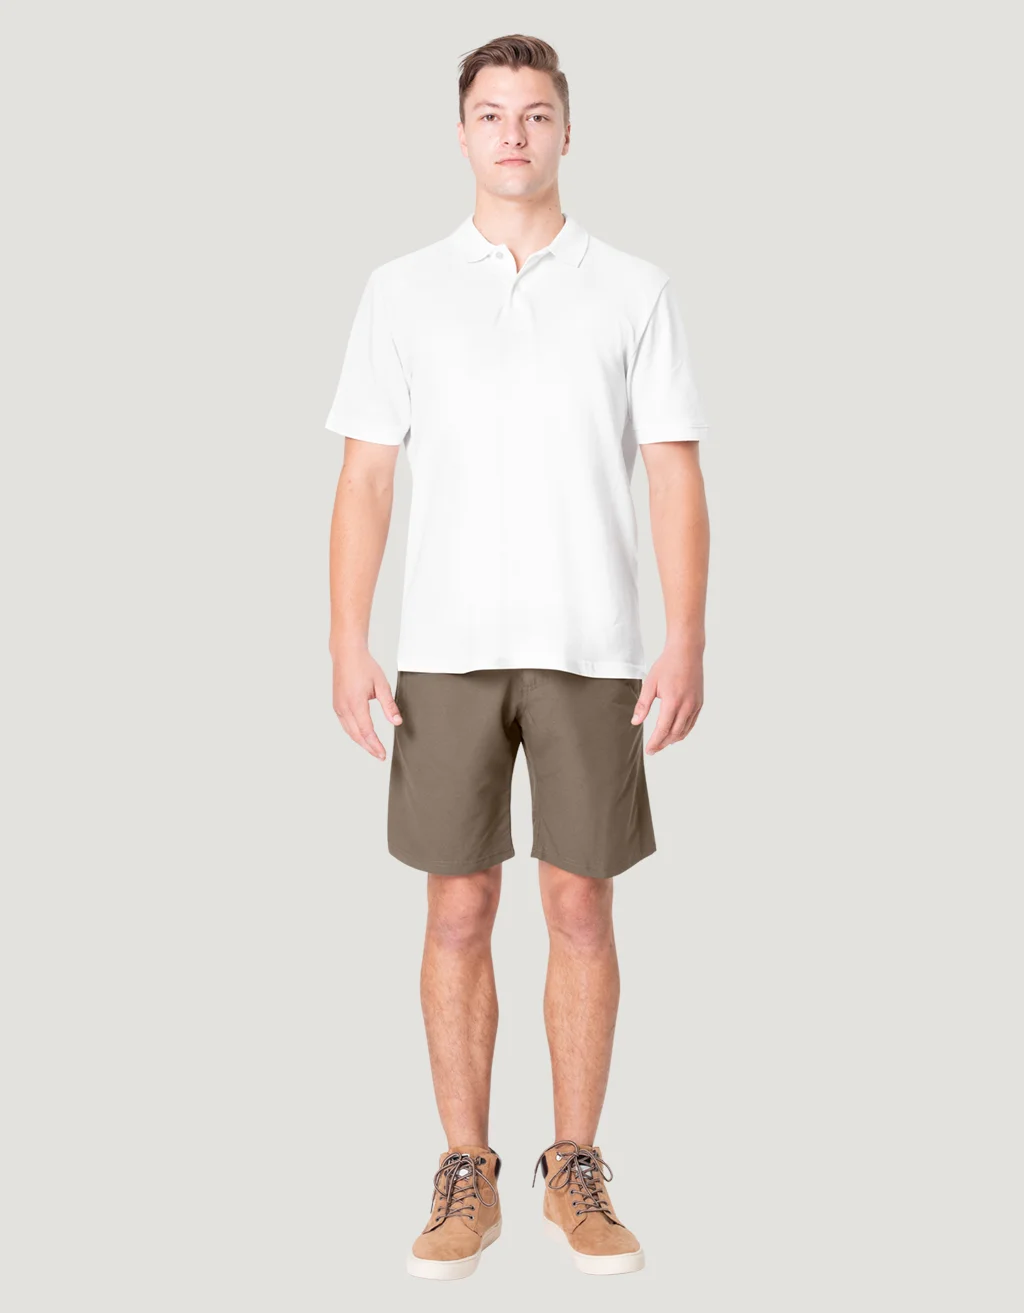 buy white polo t-shirt mens buy online under 300 india tshirt manufadturers